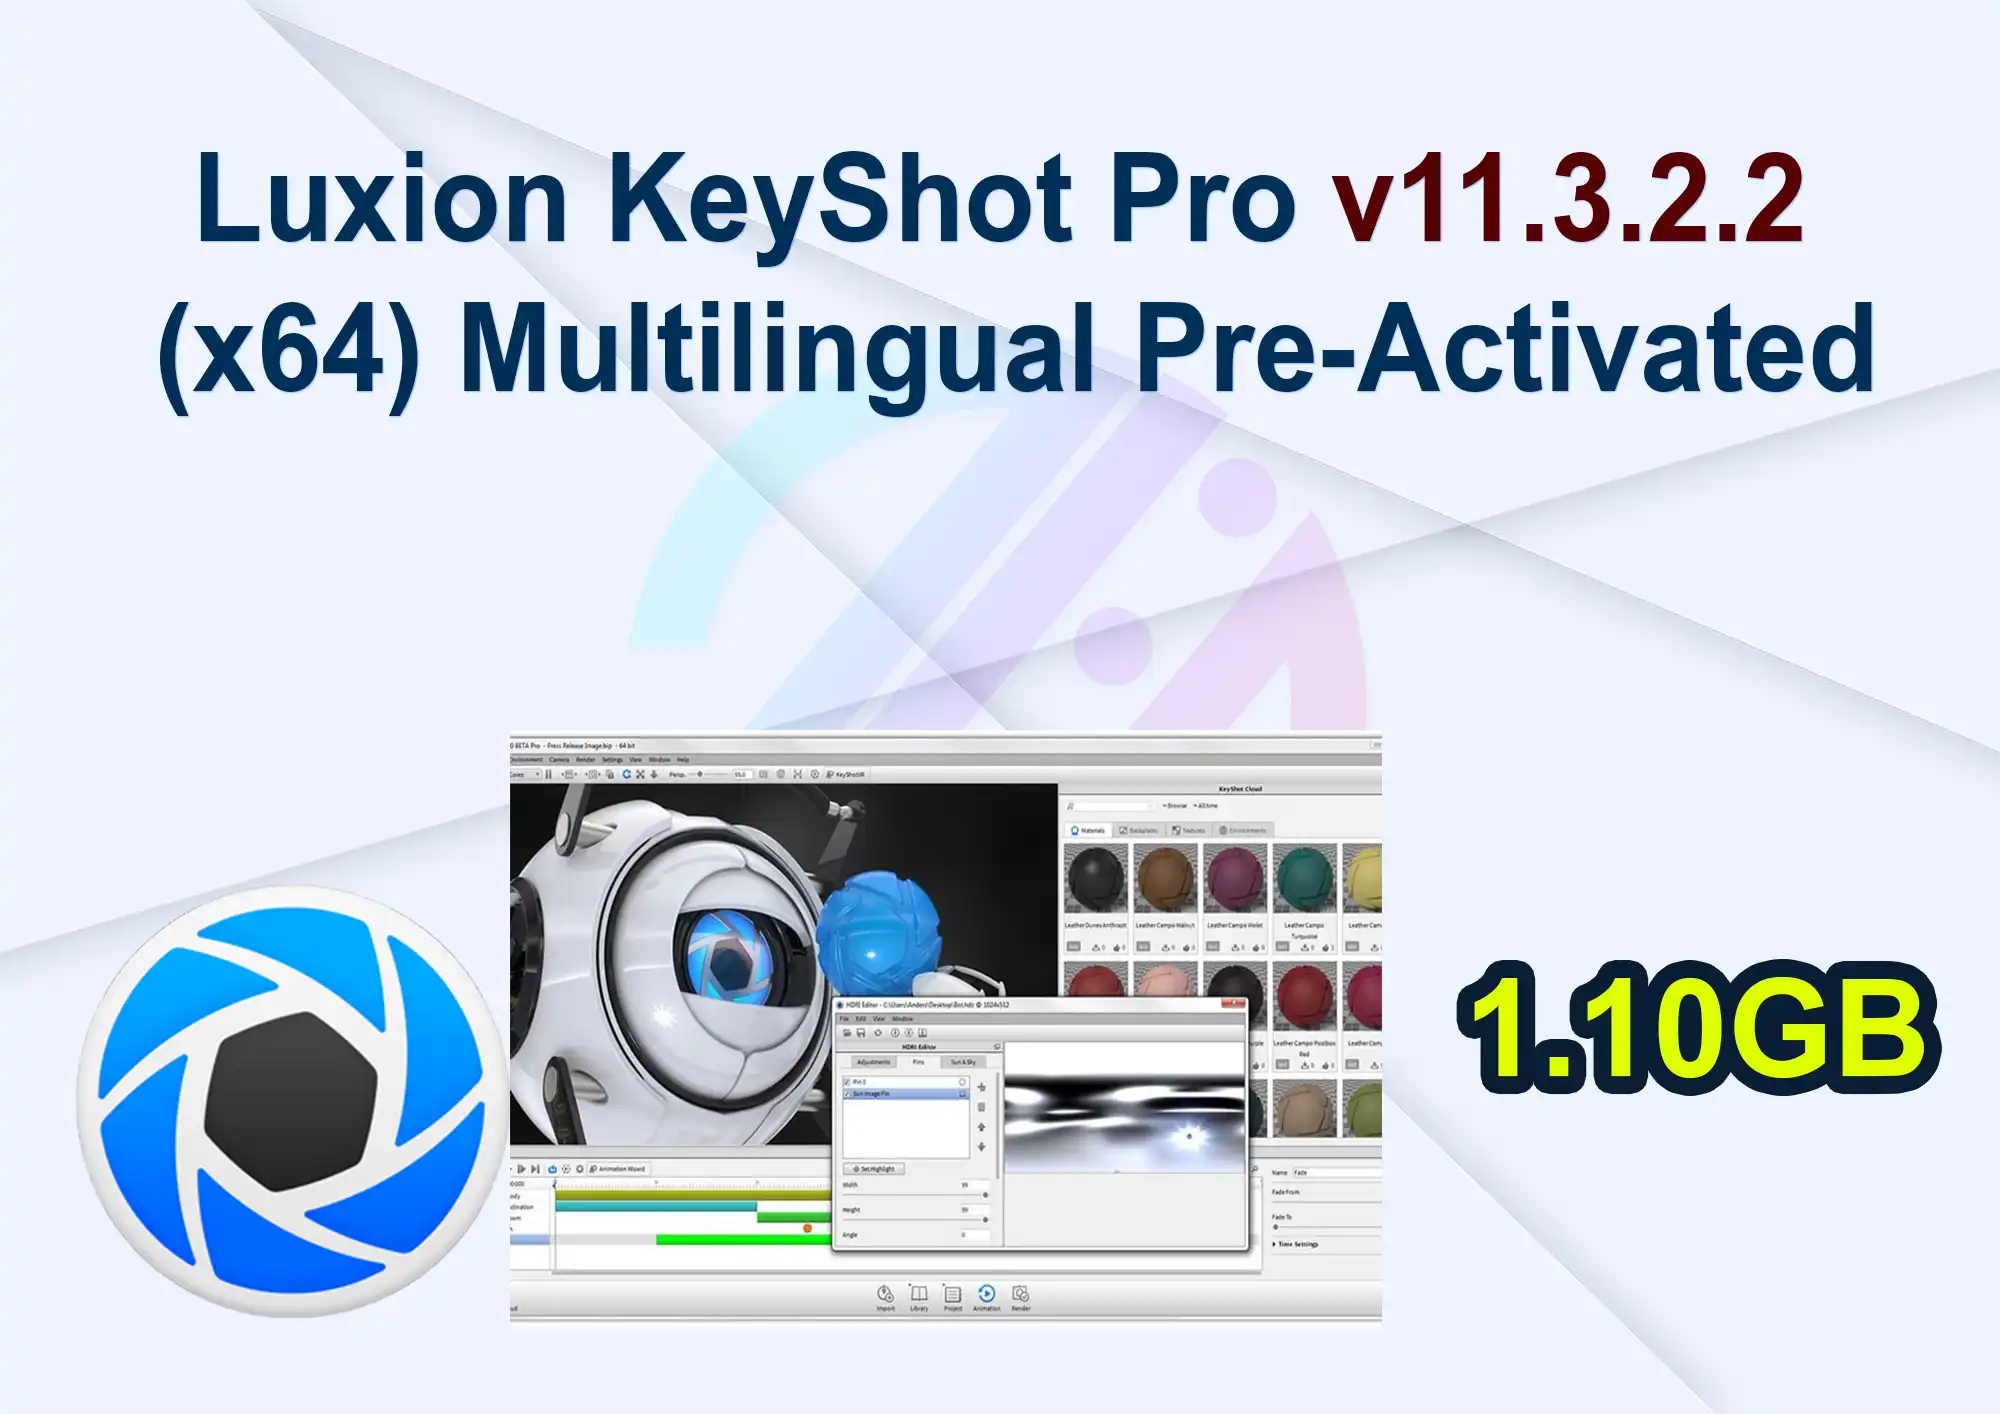 Luxion KeyShot Pro v11.3.2.2 (x64) Multilingual Pre-Activated